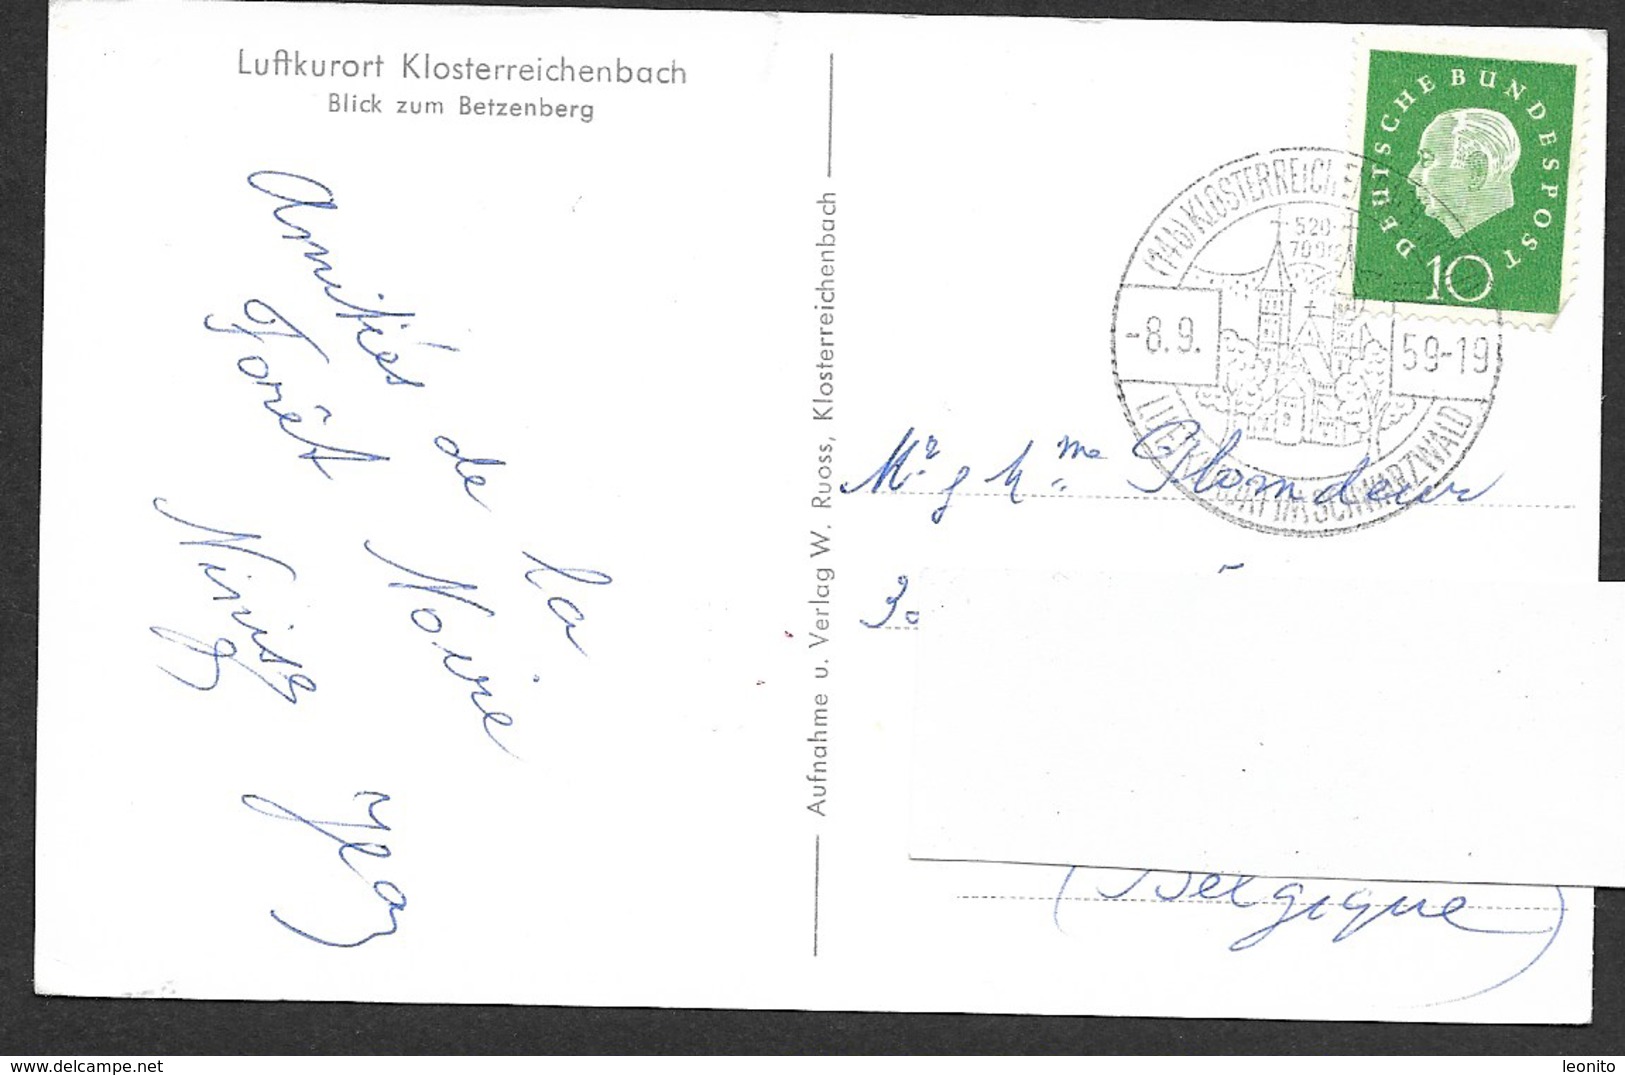 KLOSTERREICHENBACH Baiersbronn Freudenstadt Betzenberg 1959 - Baiersbronn